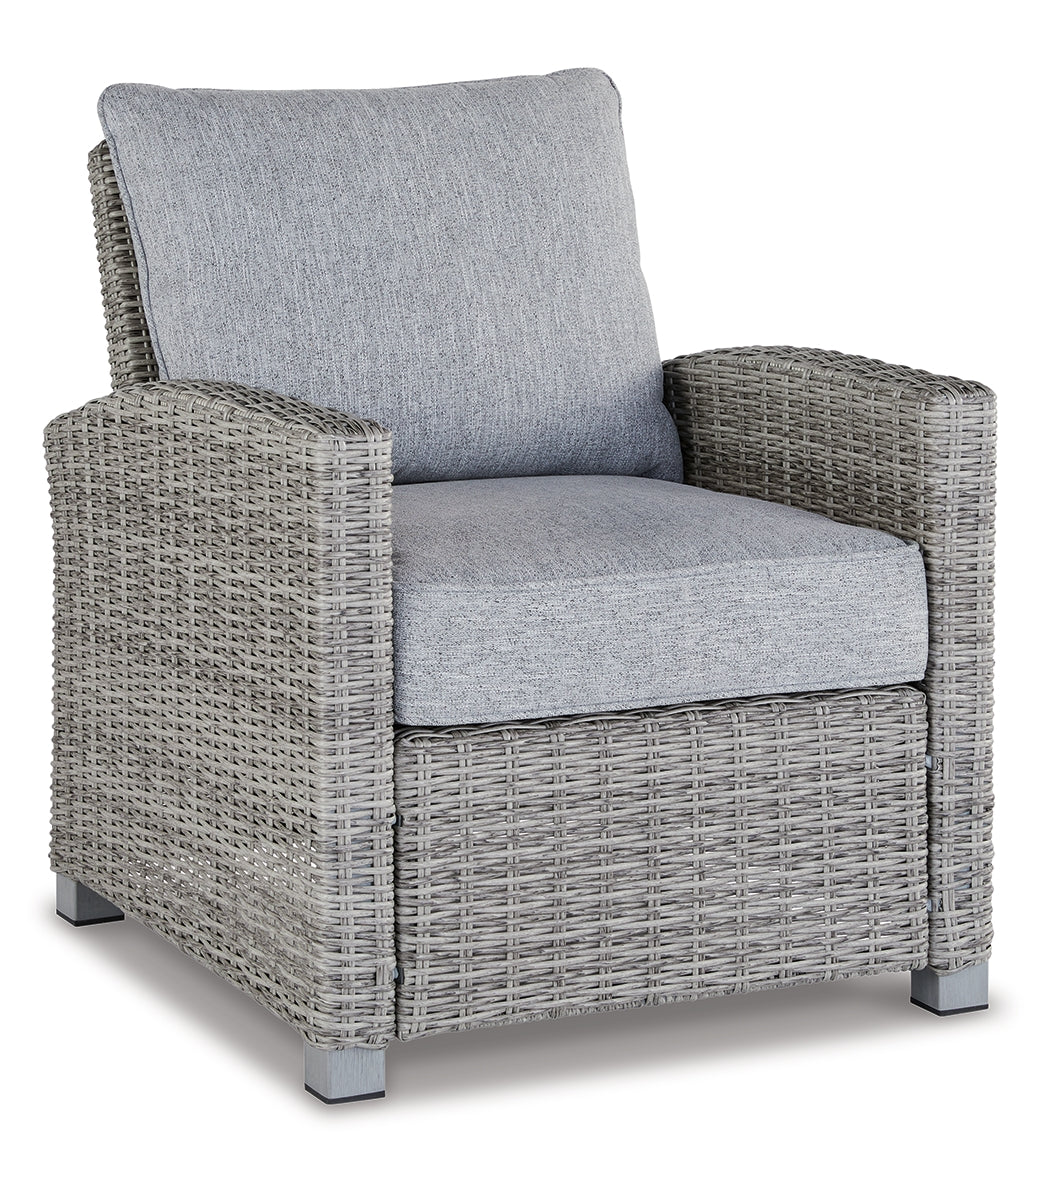 NAPLES BEACH Lounge Chair with Cushion